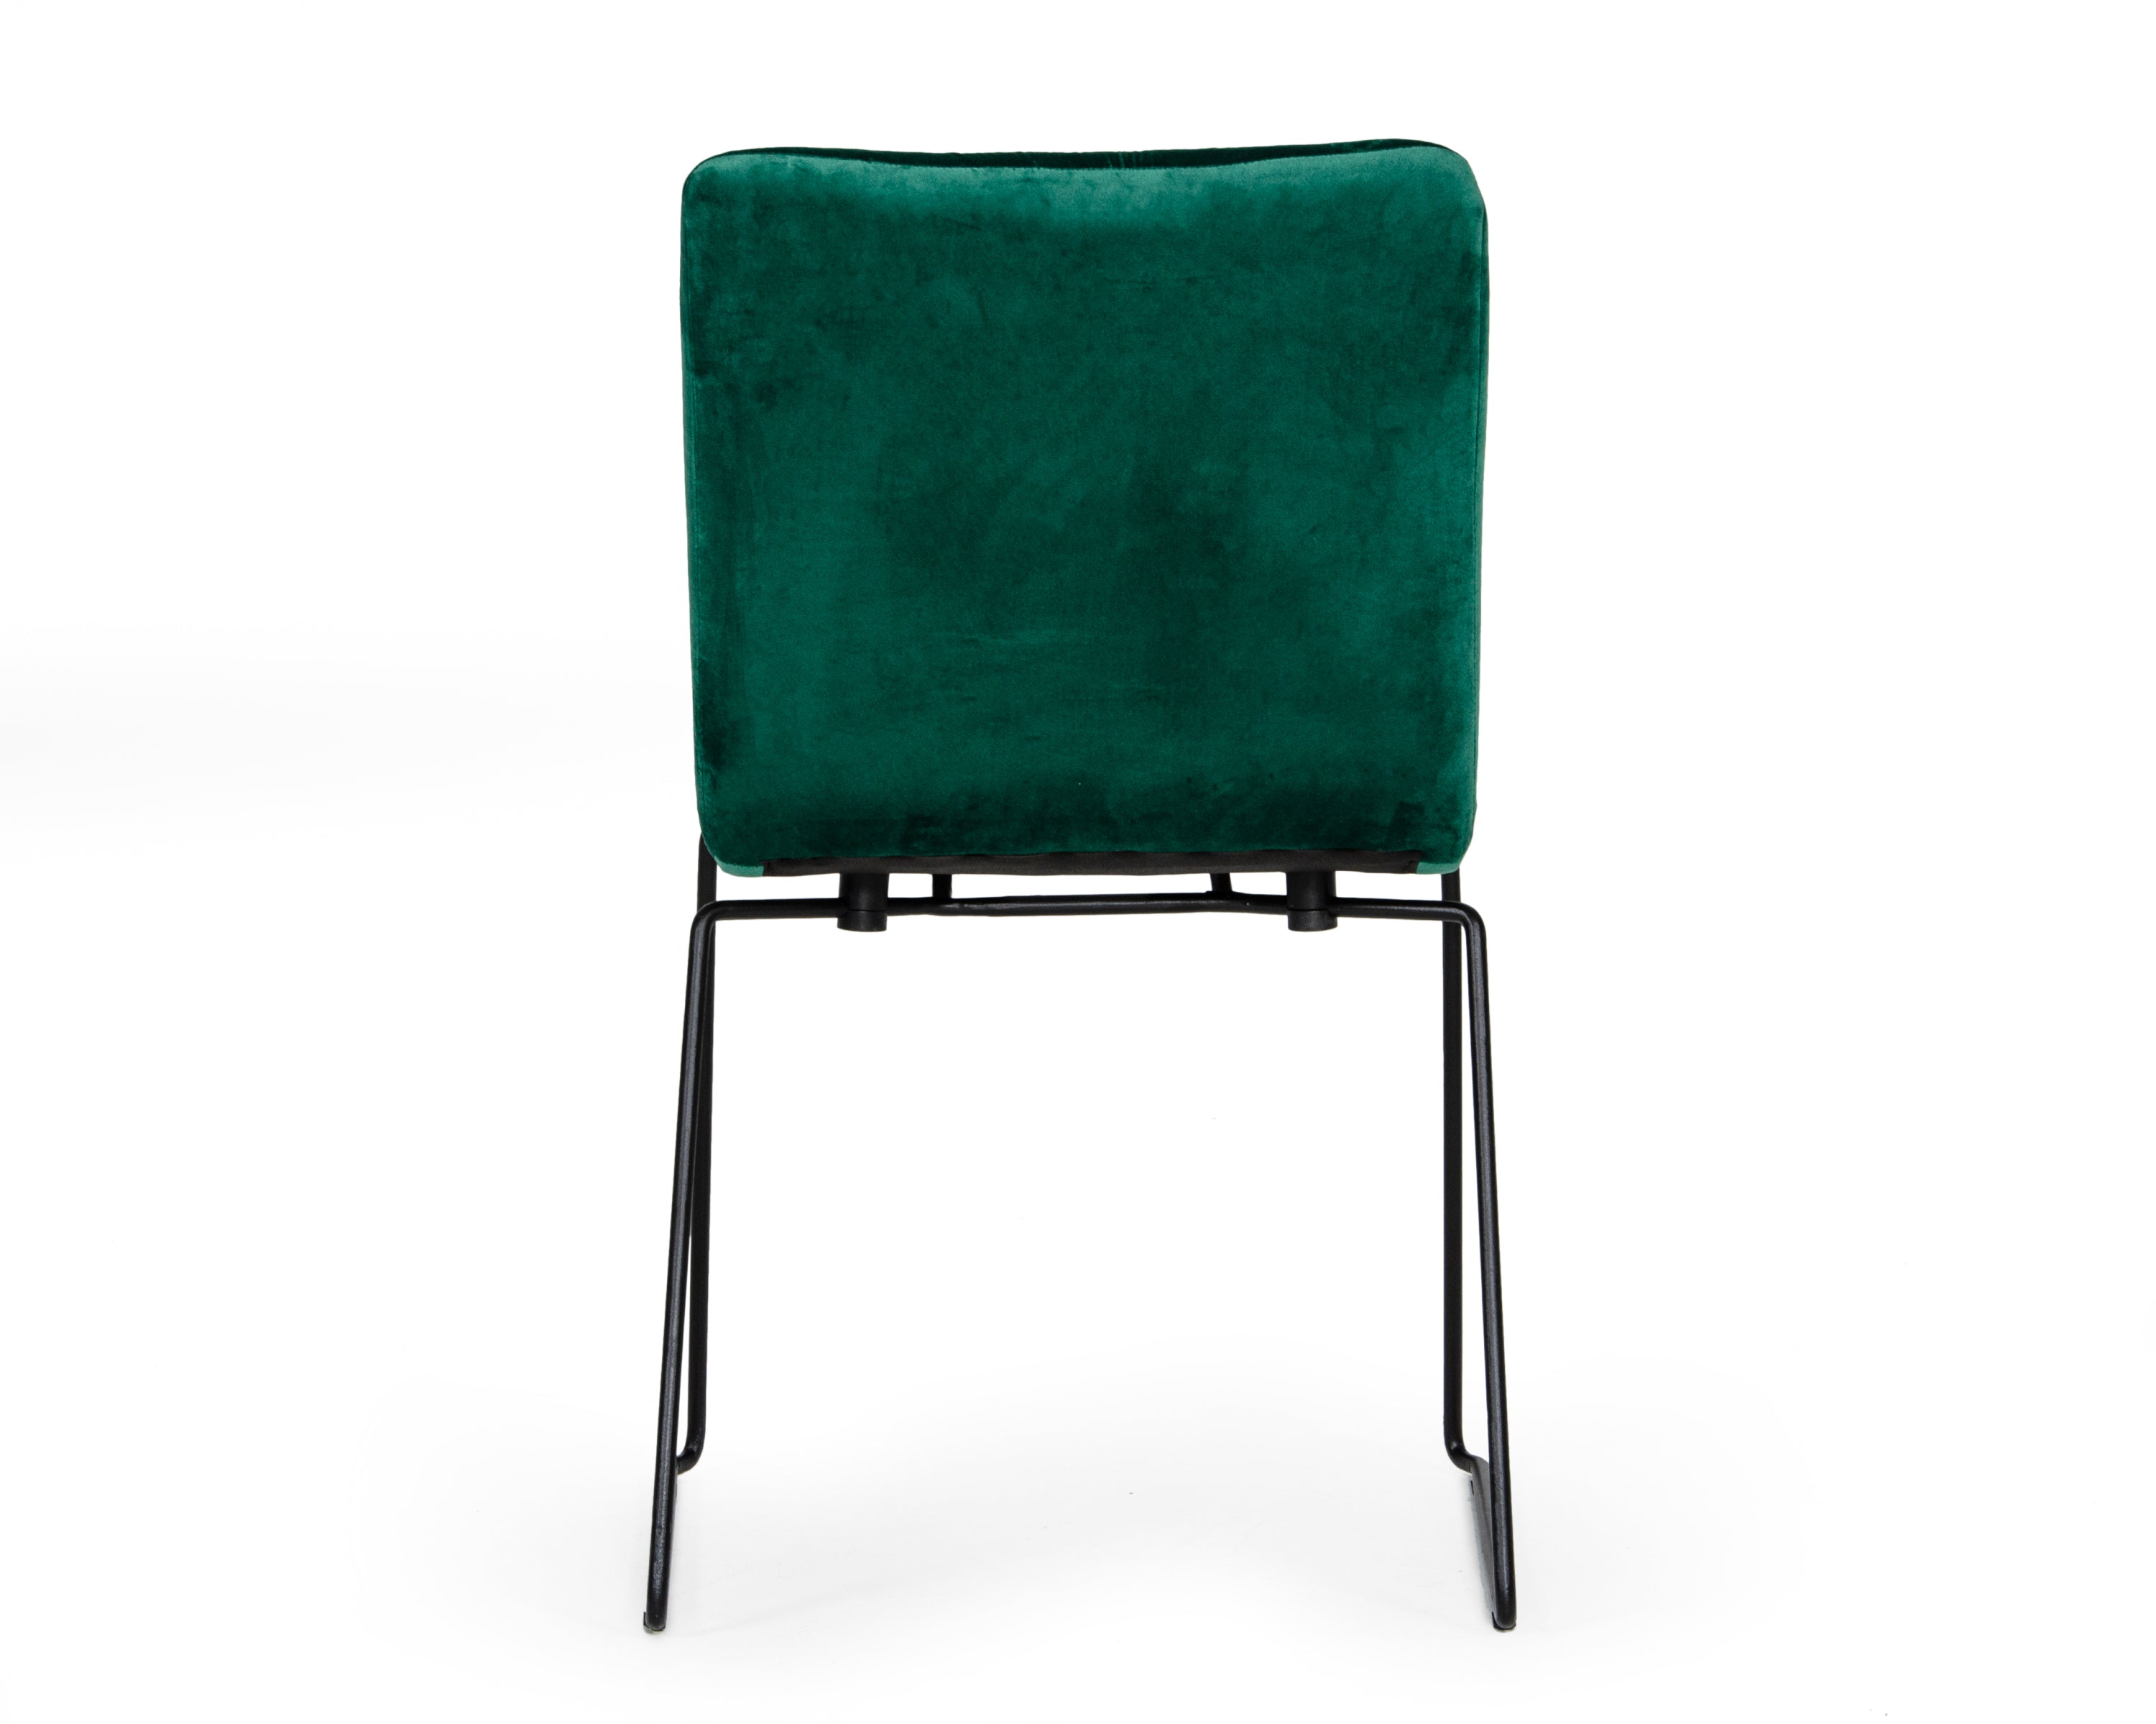 Modern Green Chairs